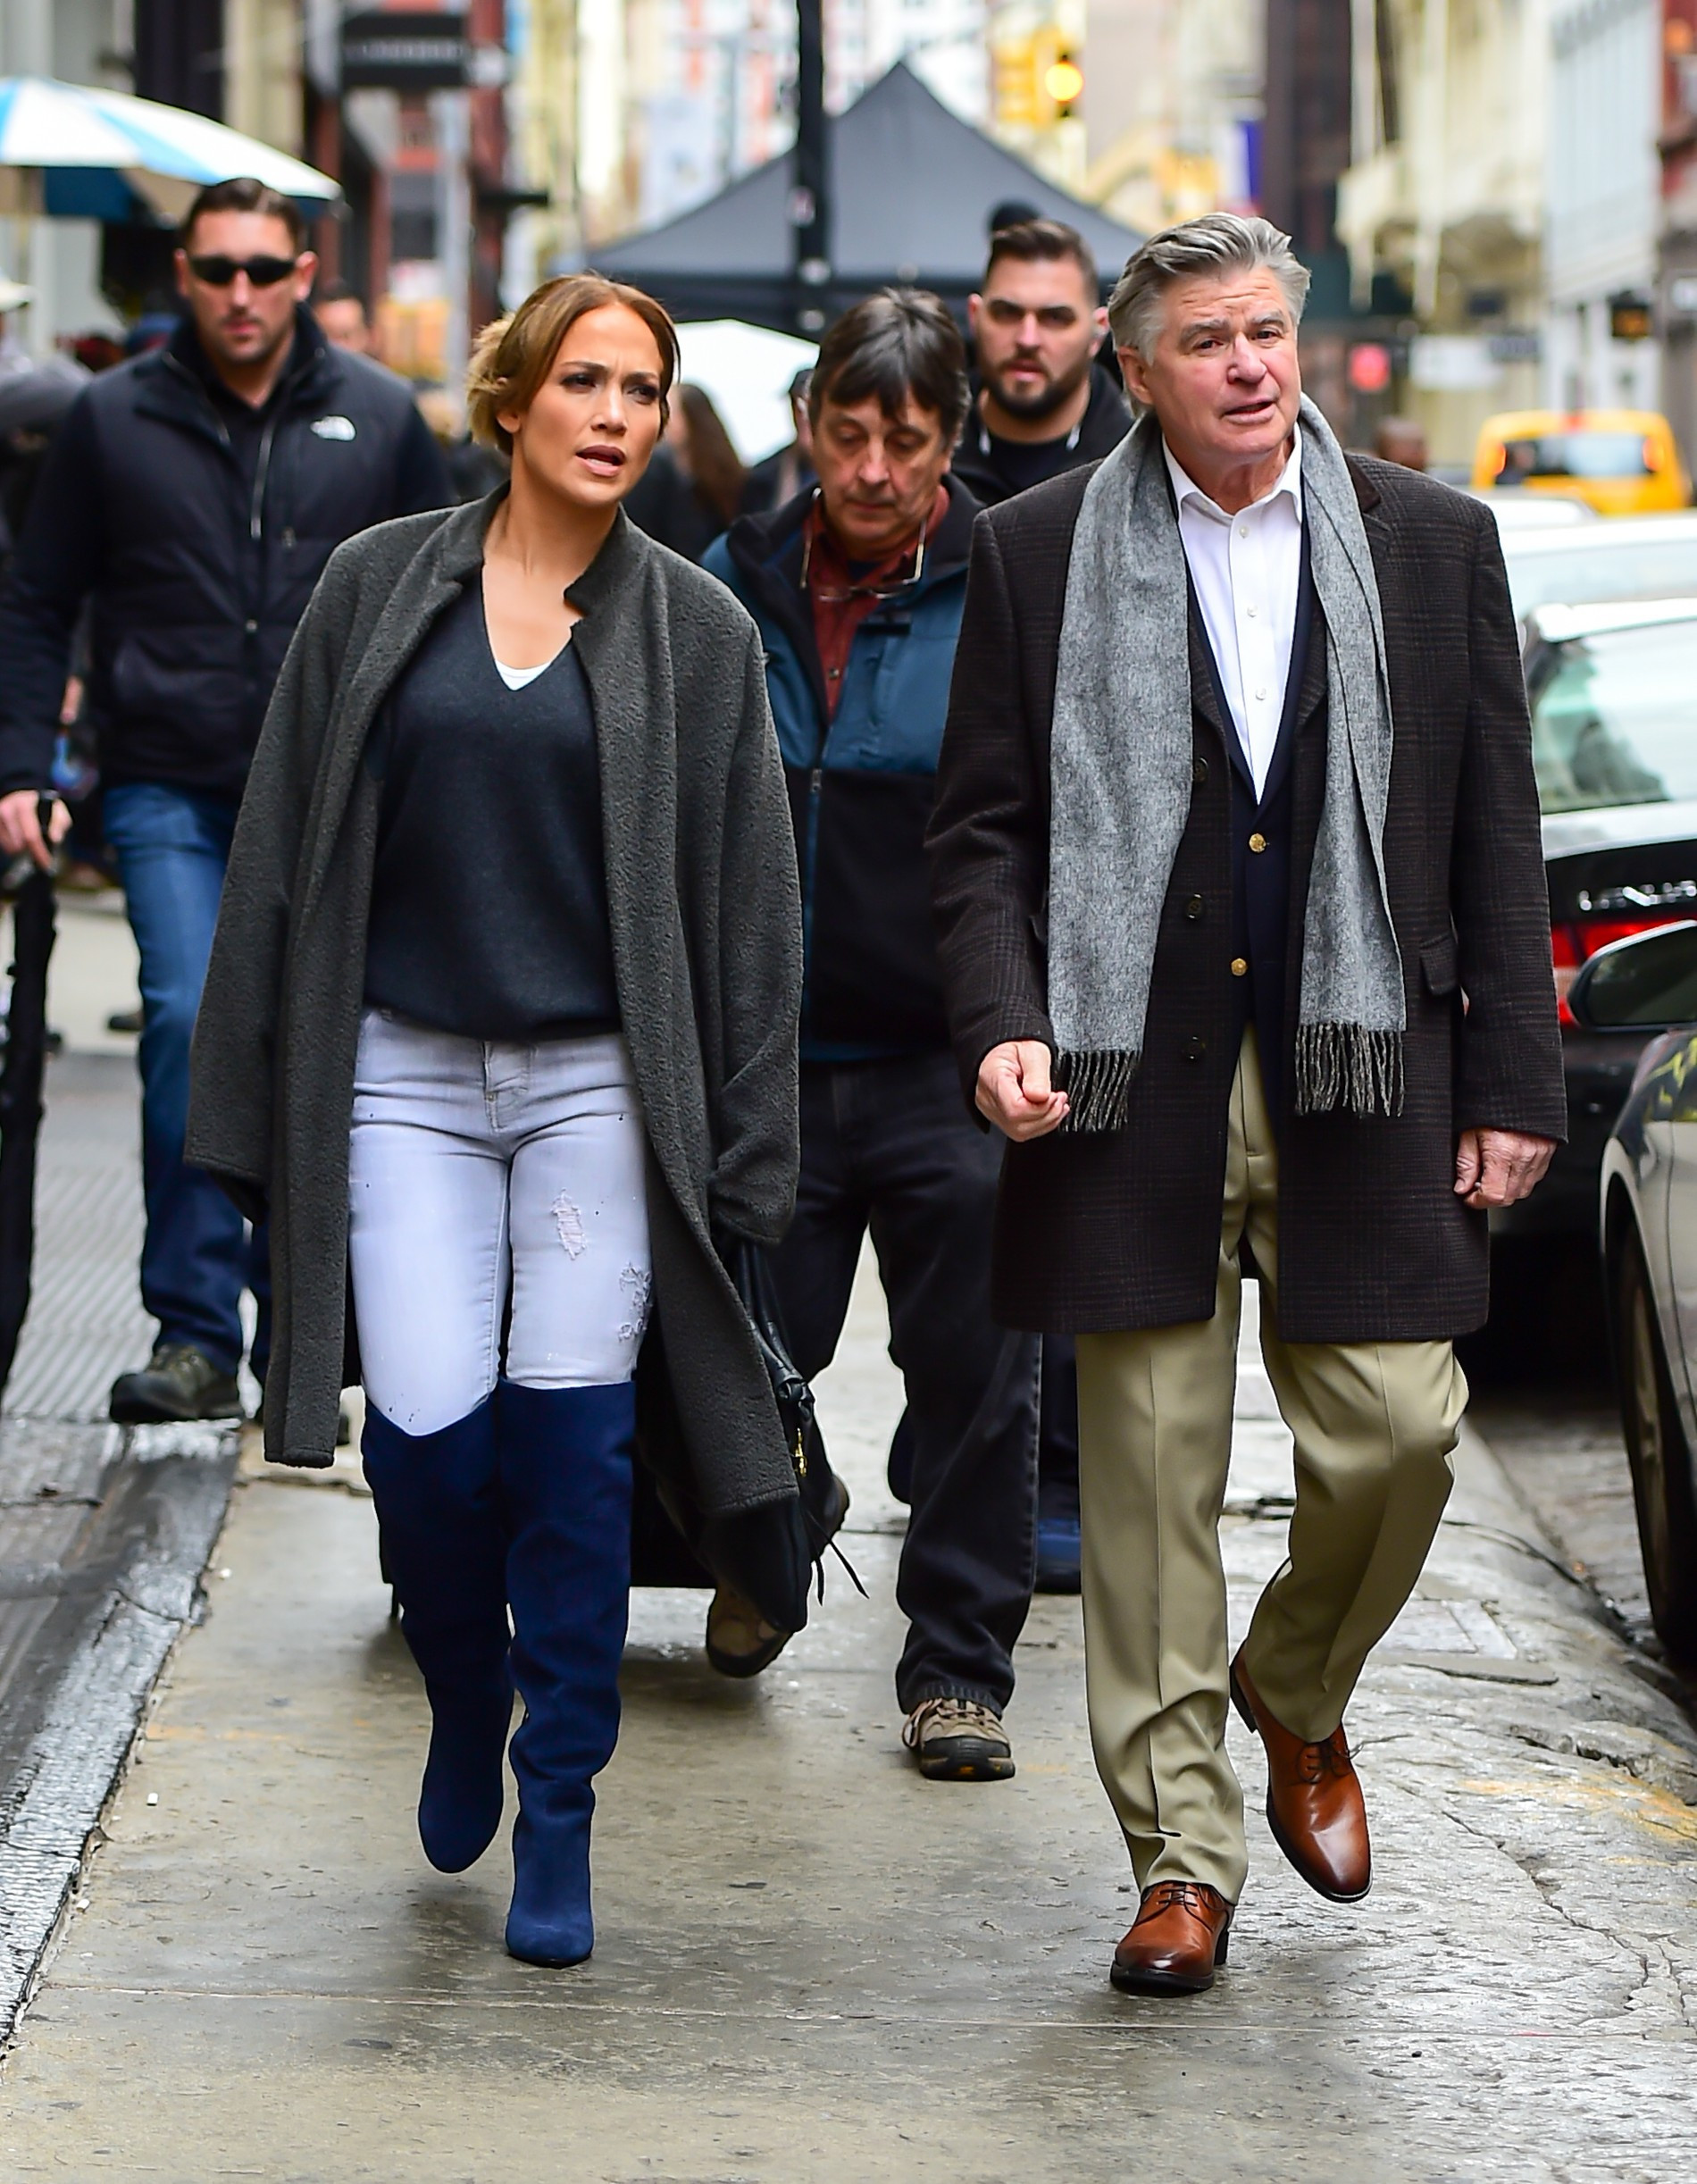 Трит Уильямс и Дженнифер Лопес на съемках фильма «Начни сначала» в Нью-Йорке в 2017 году
Фото: Getty Images